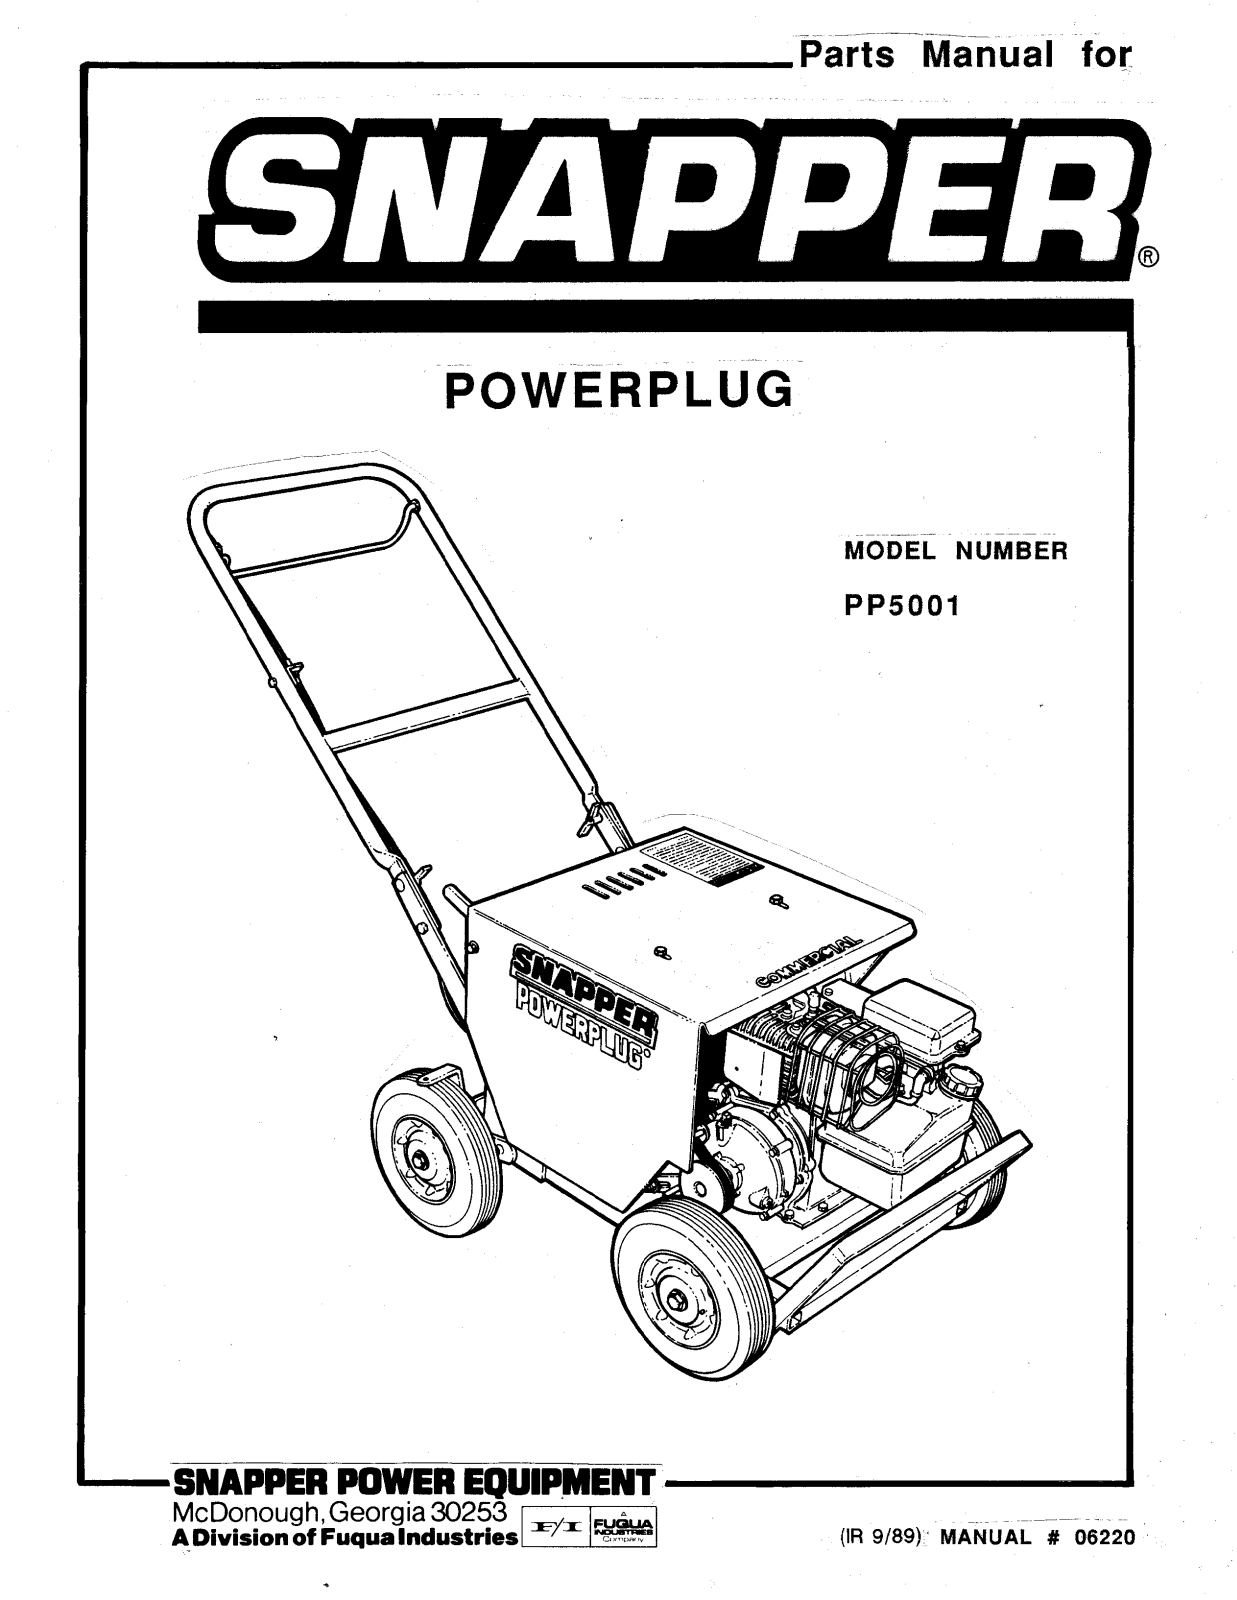 Snapper PP5001 User Manual